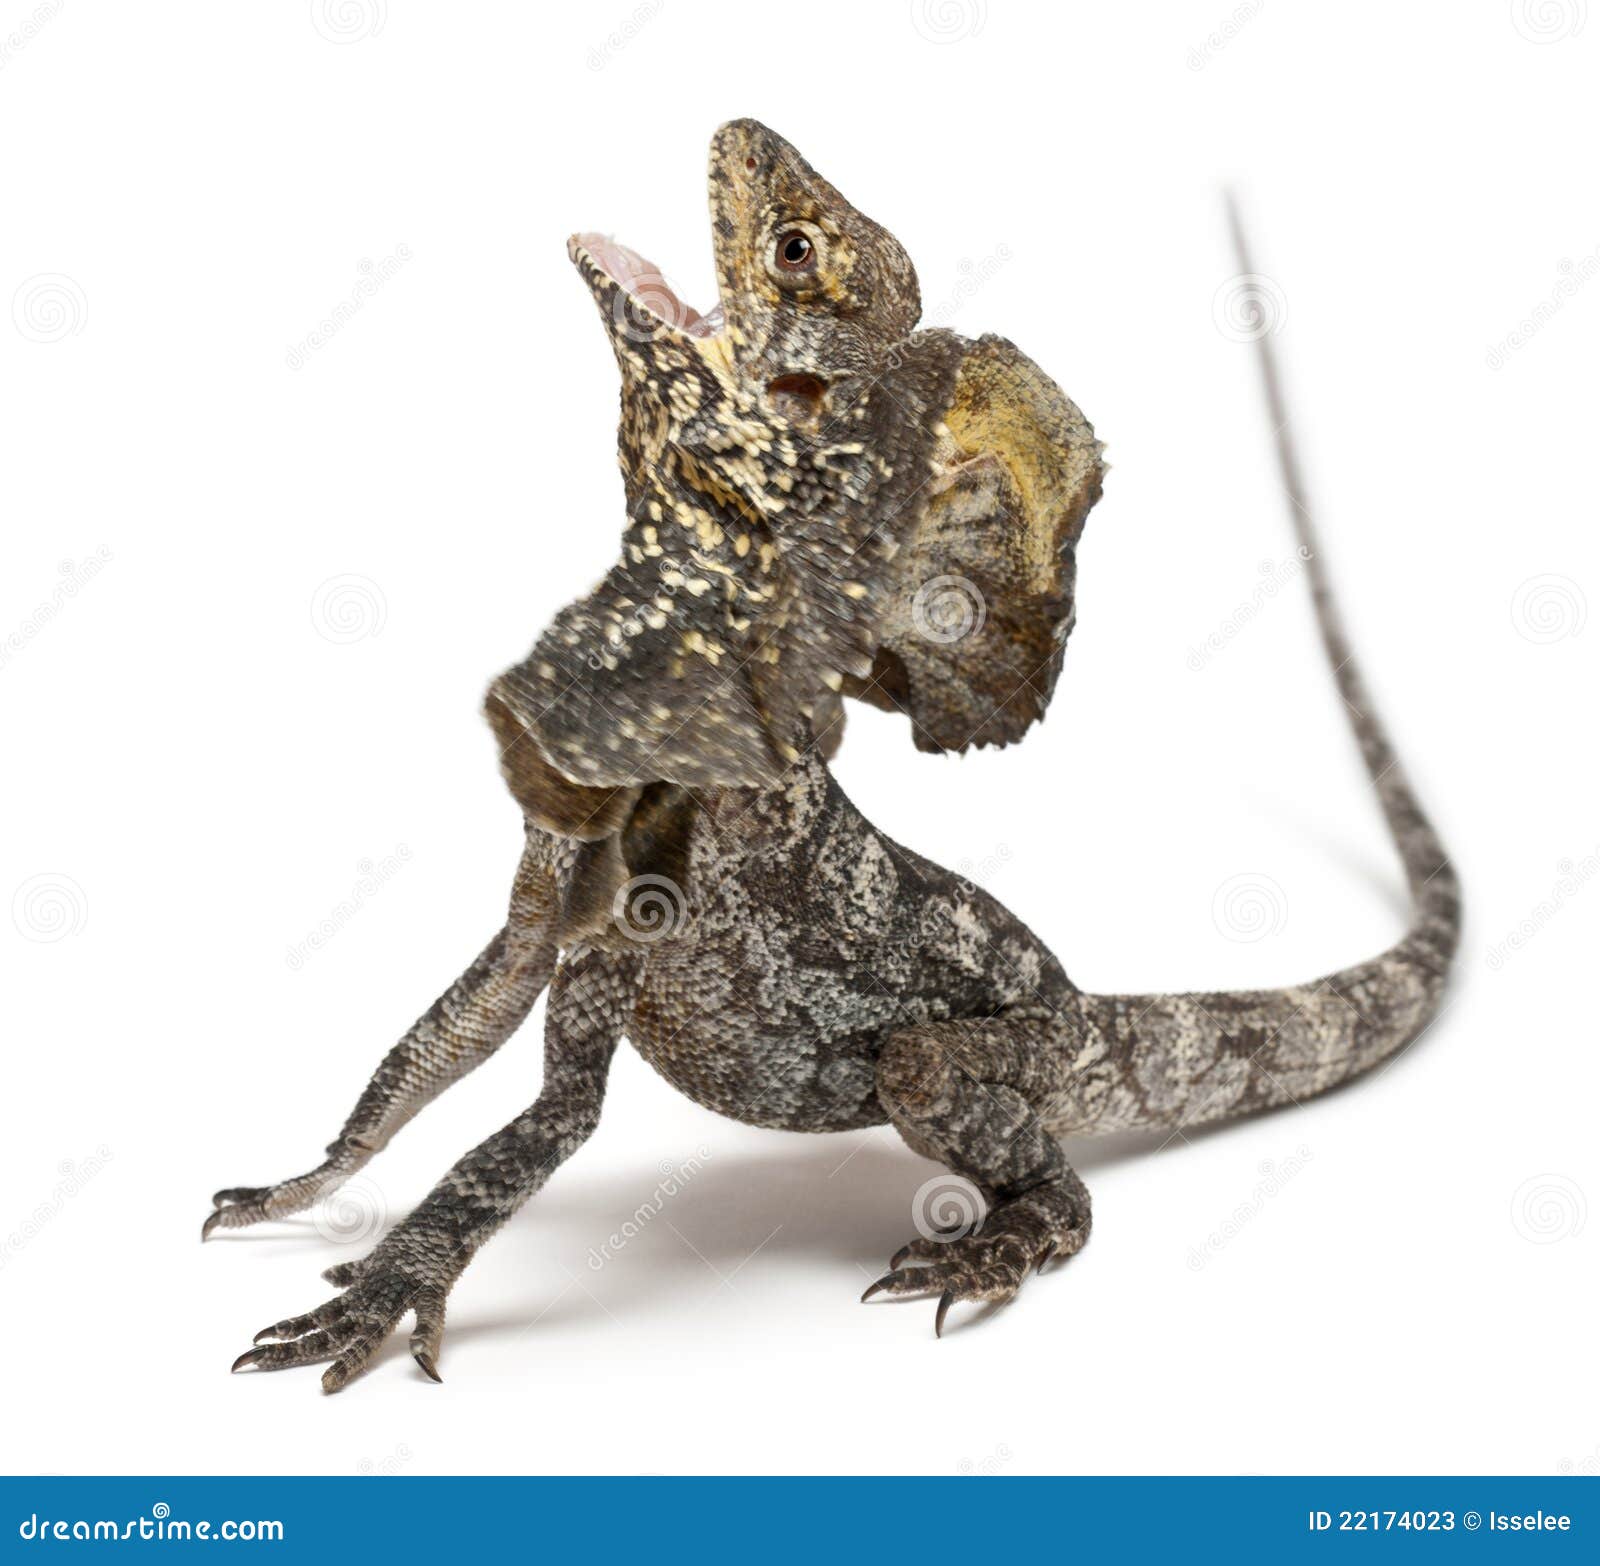 frill-necked lizard